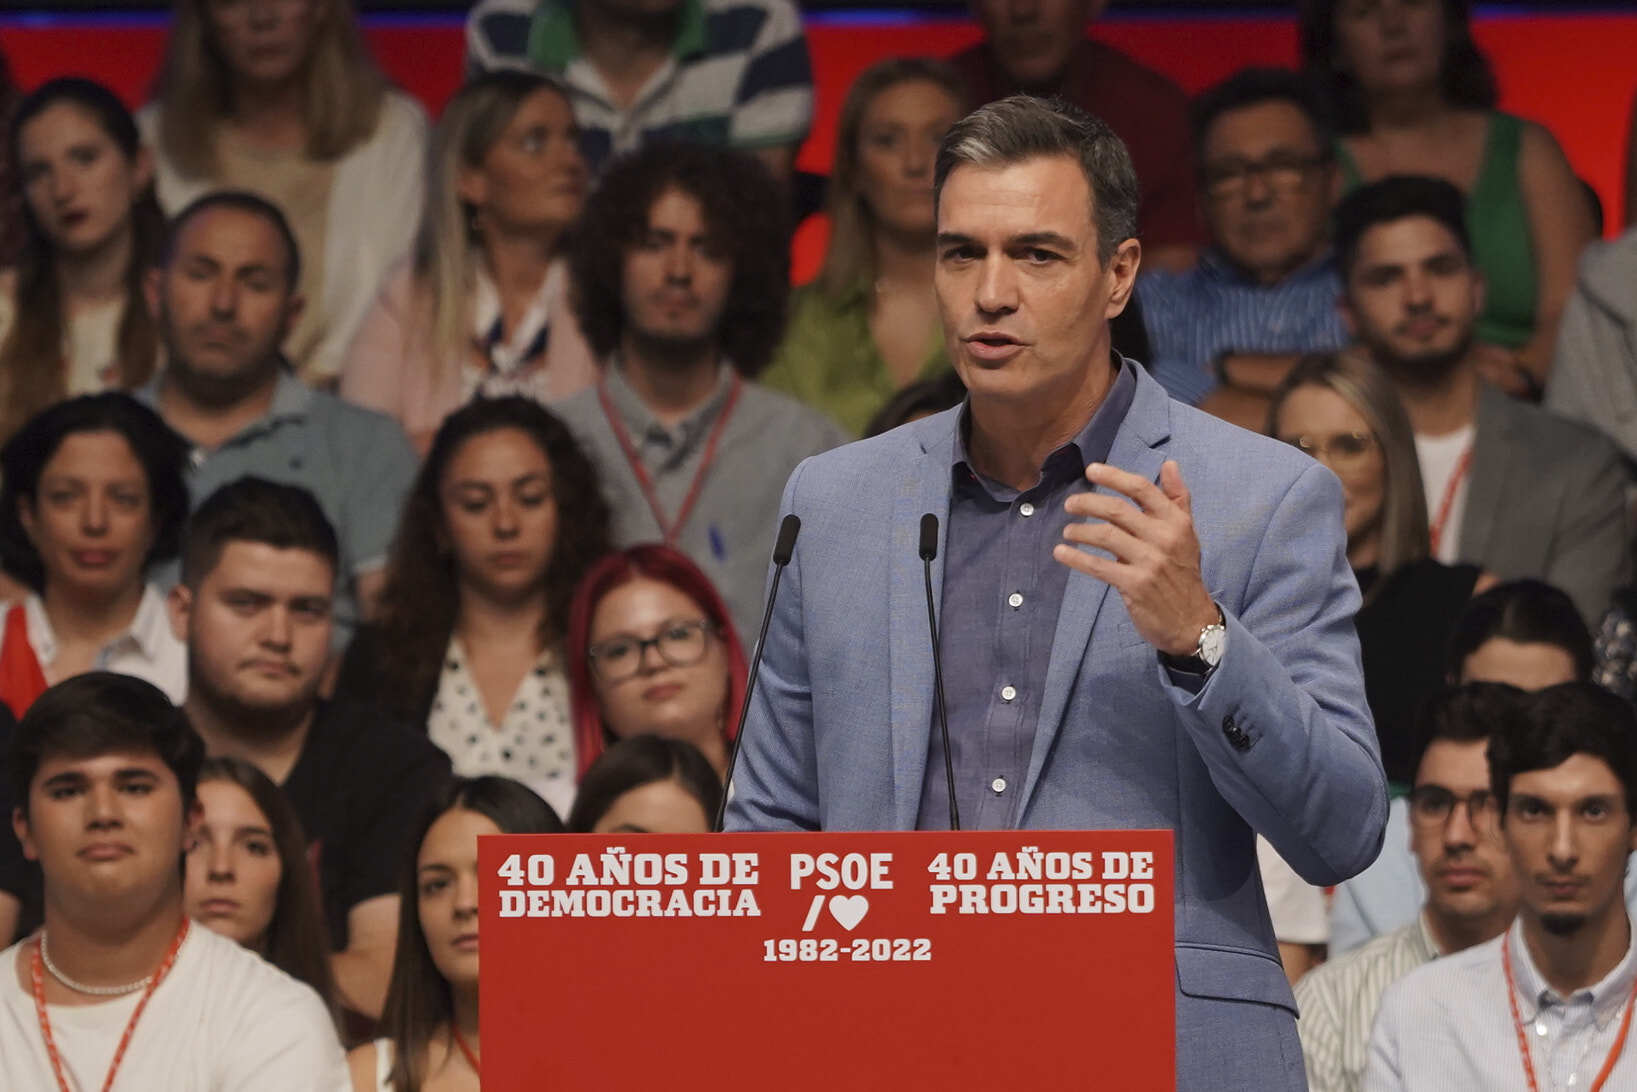 La meitat dels votants del PSOE, en contra que Pedro Sánchez reformi el delicte de sedició